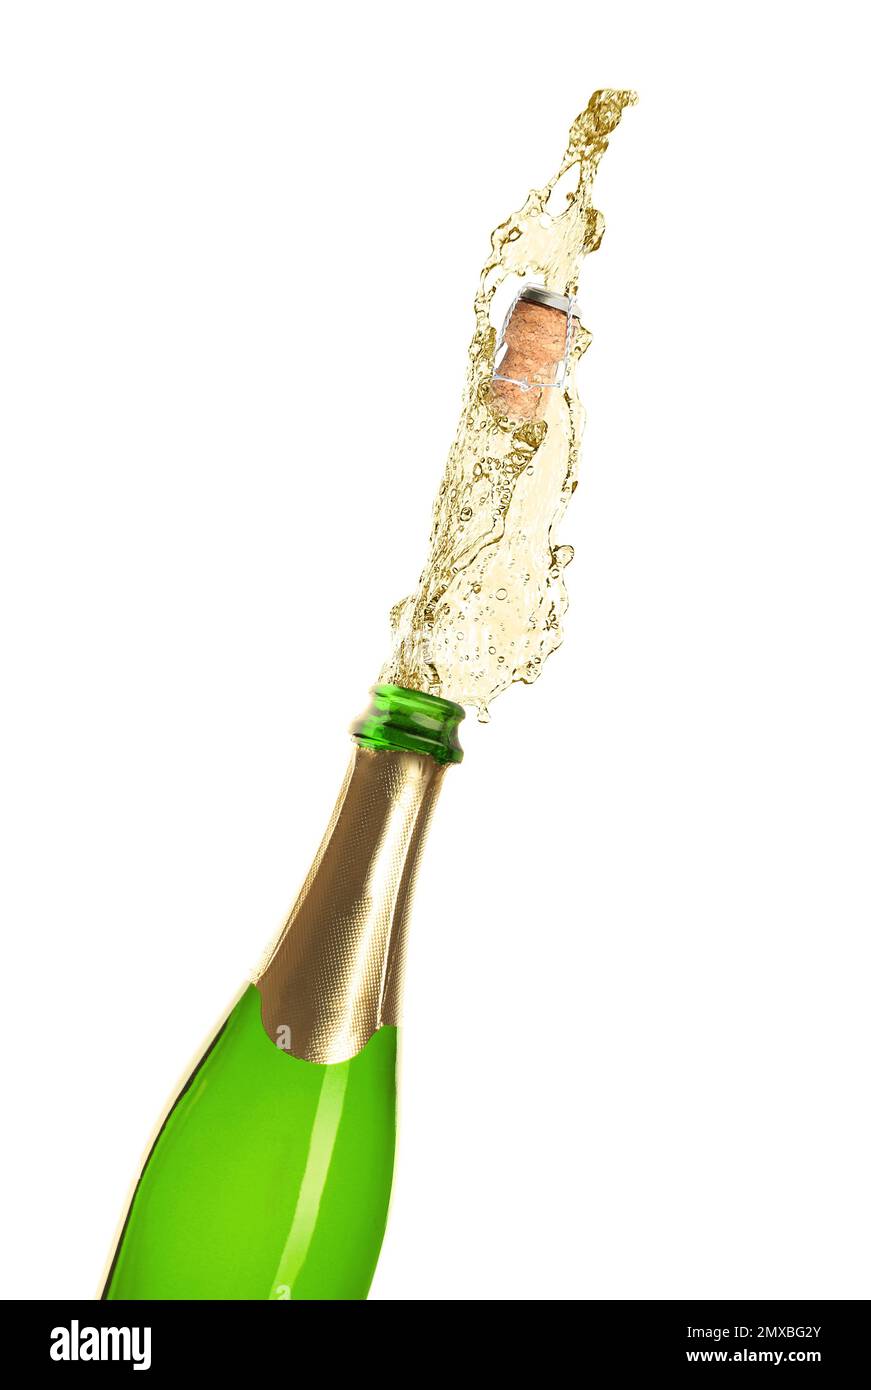 Champagne splashing out of bottle on white background Stock Photo